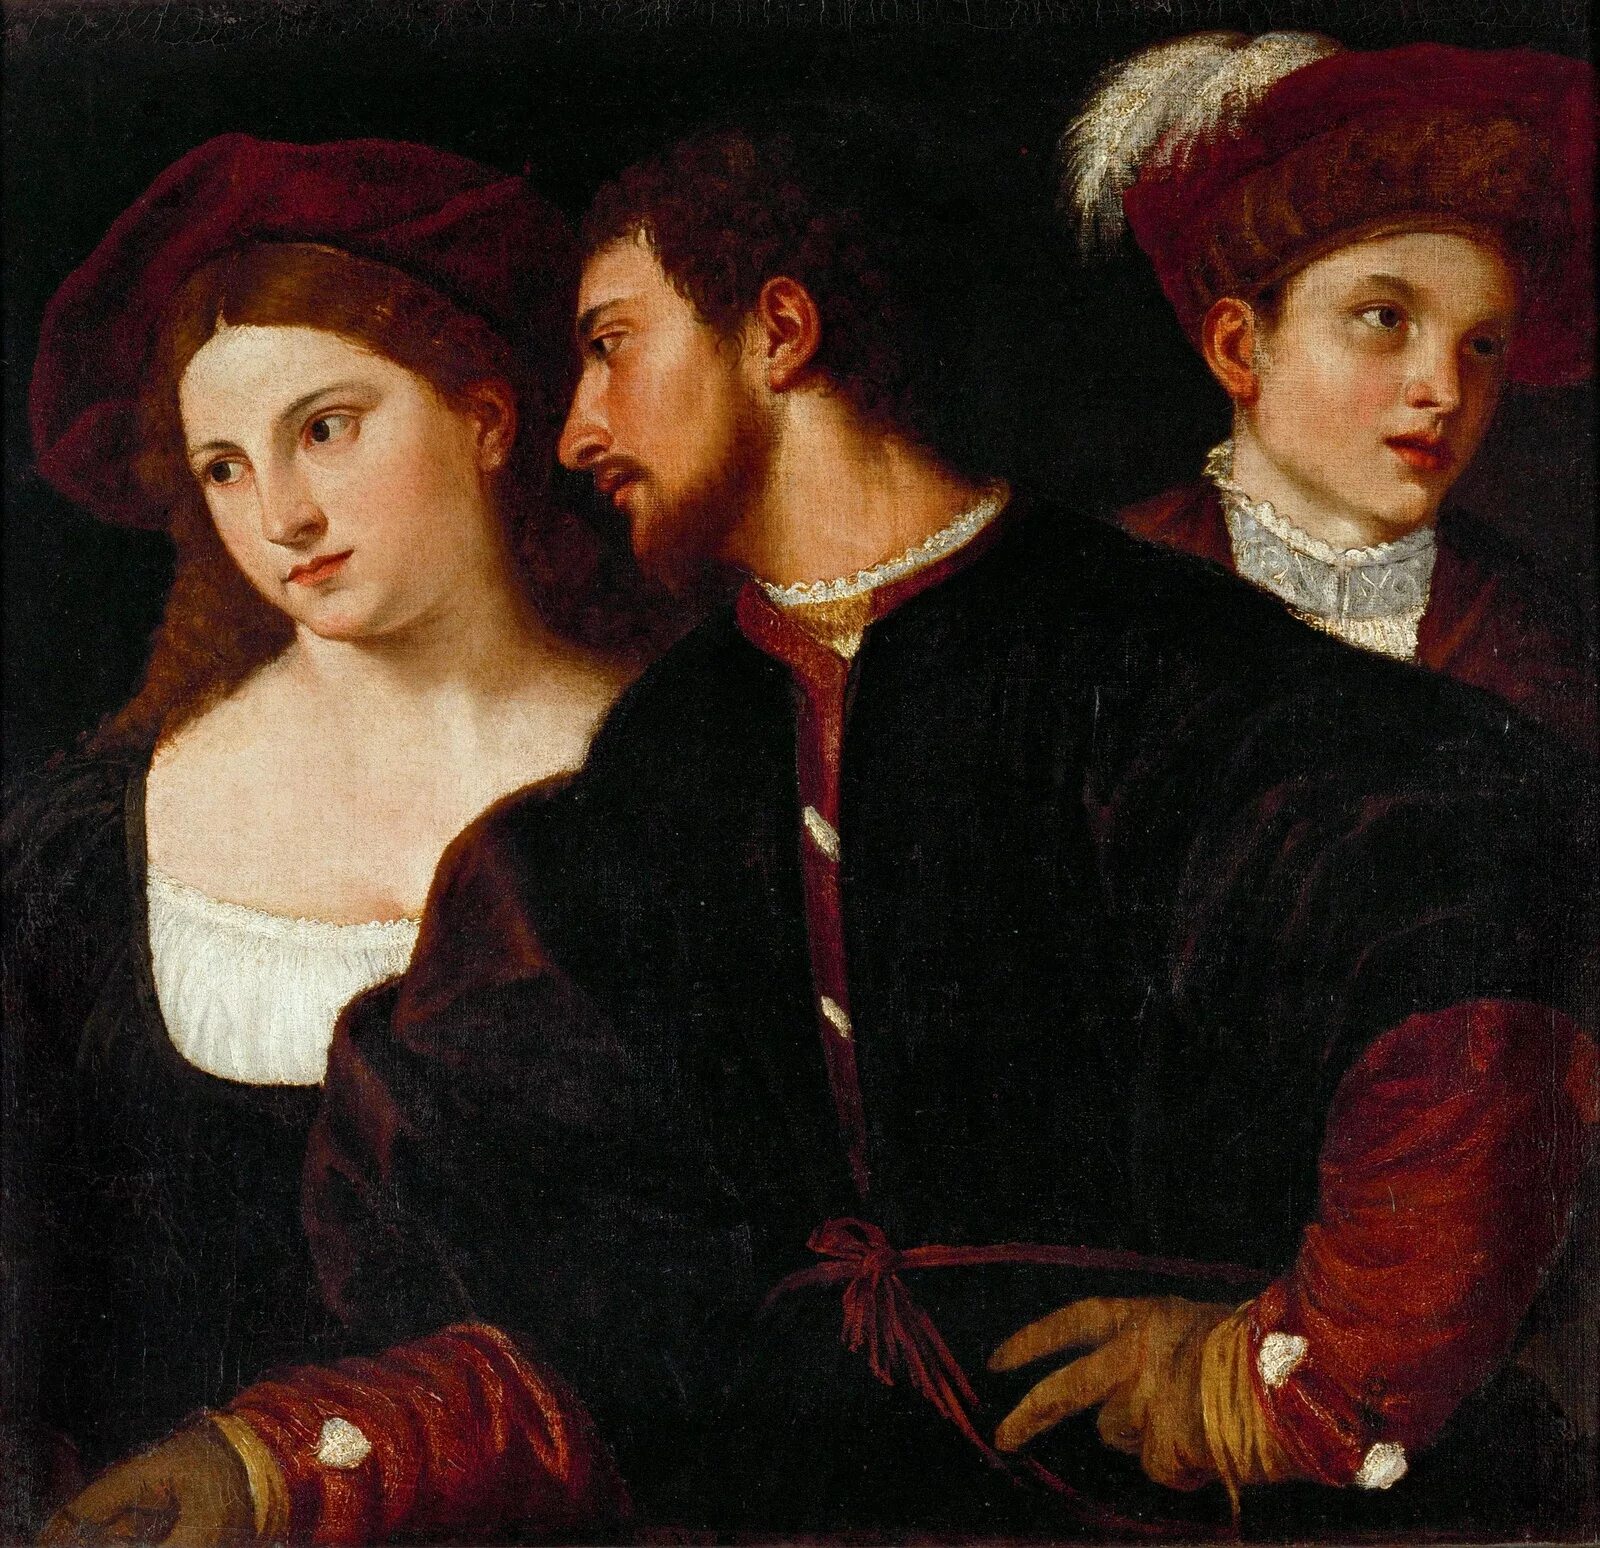 Тициан эпоха Возрождения. Тициан Вече́ллио (1488/1490 - 1576). Тициан художник эпохи Возрождения. Портреты Возрождения Тициан.